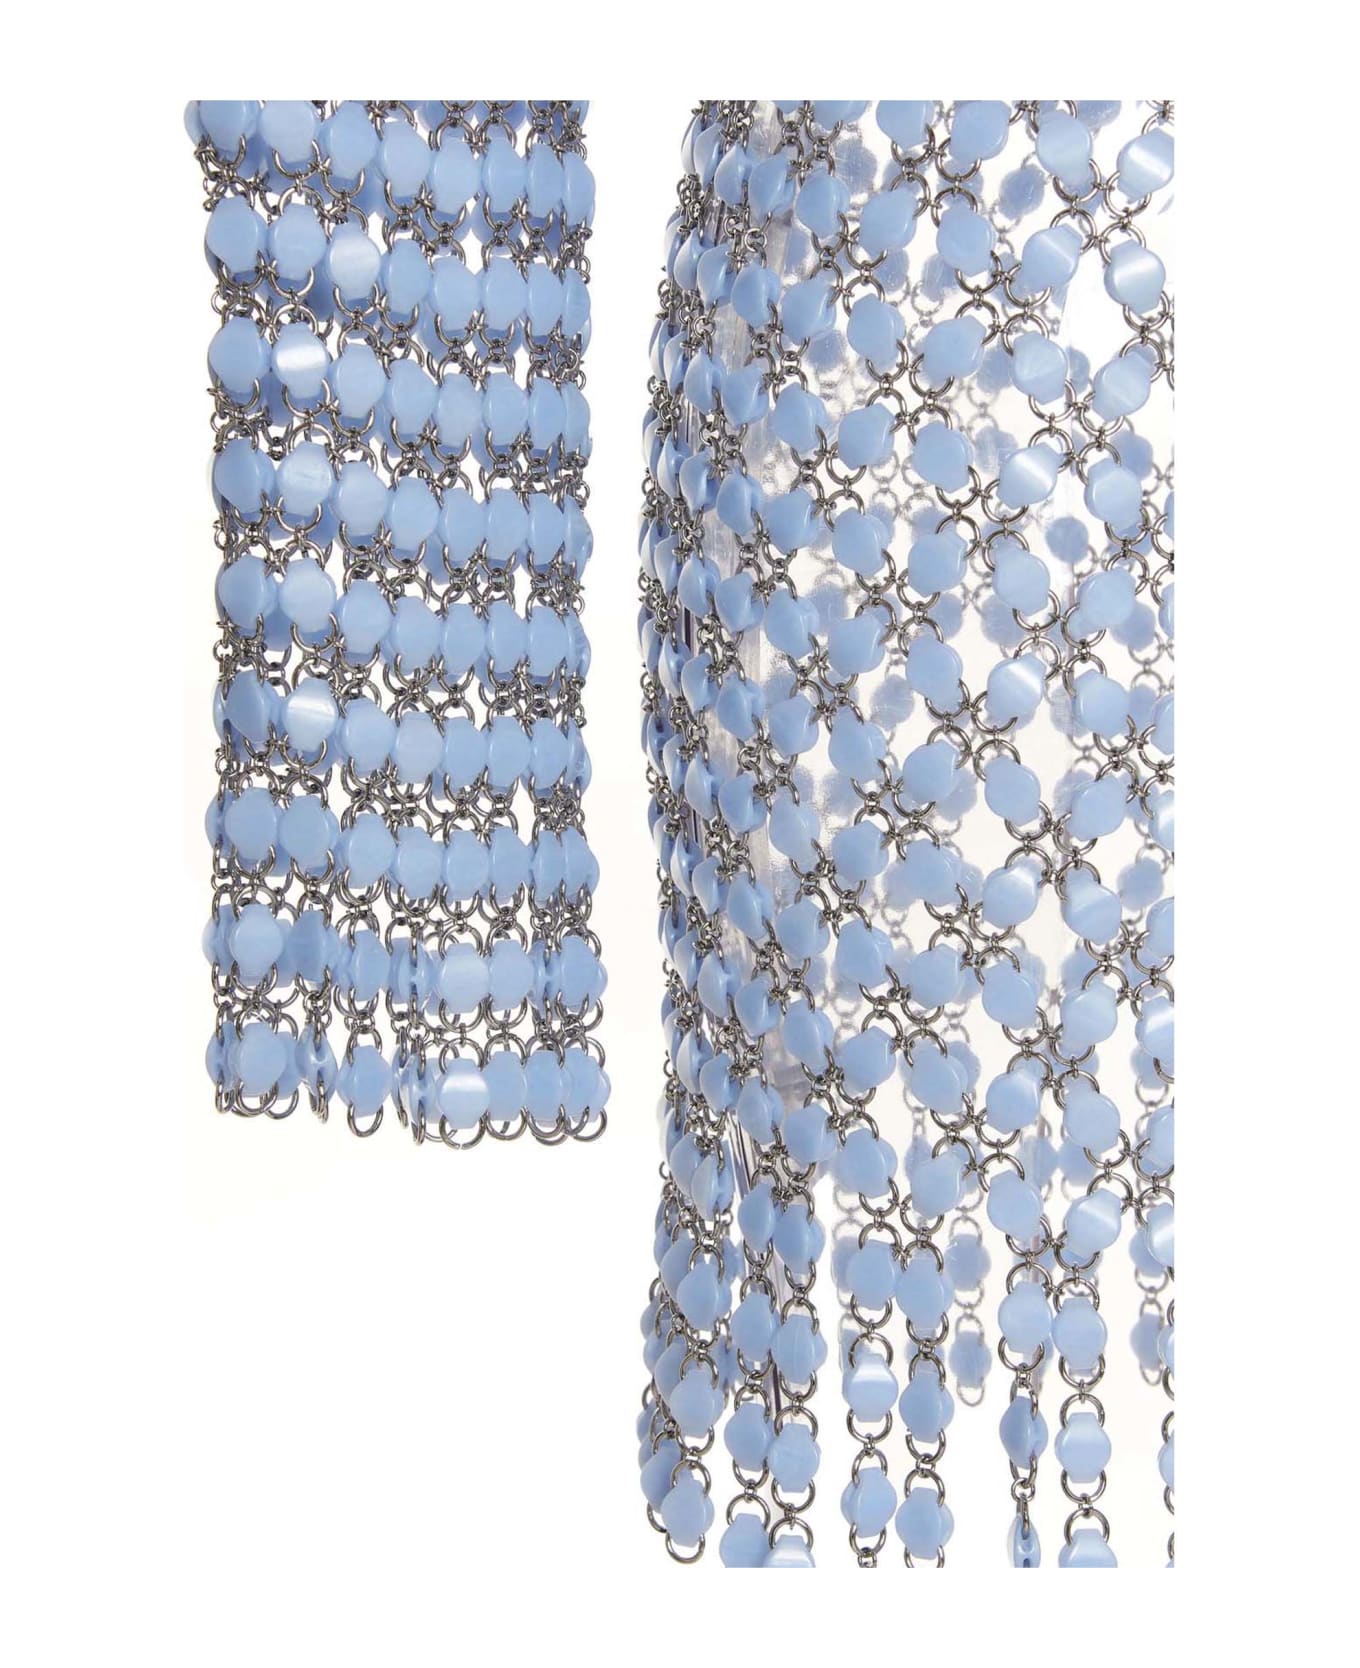 Paco Rabanne Acrylic Knit Dress - Light Blue ワンピース＆ドレス